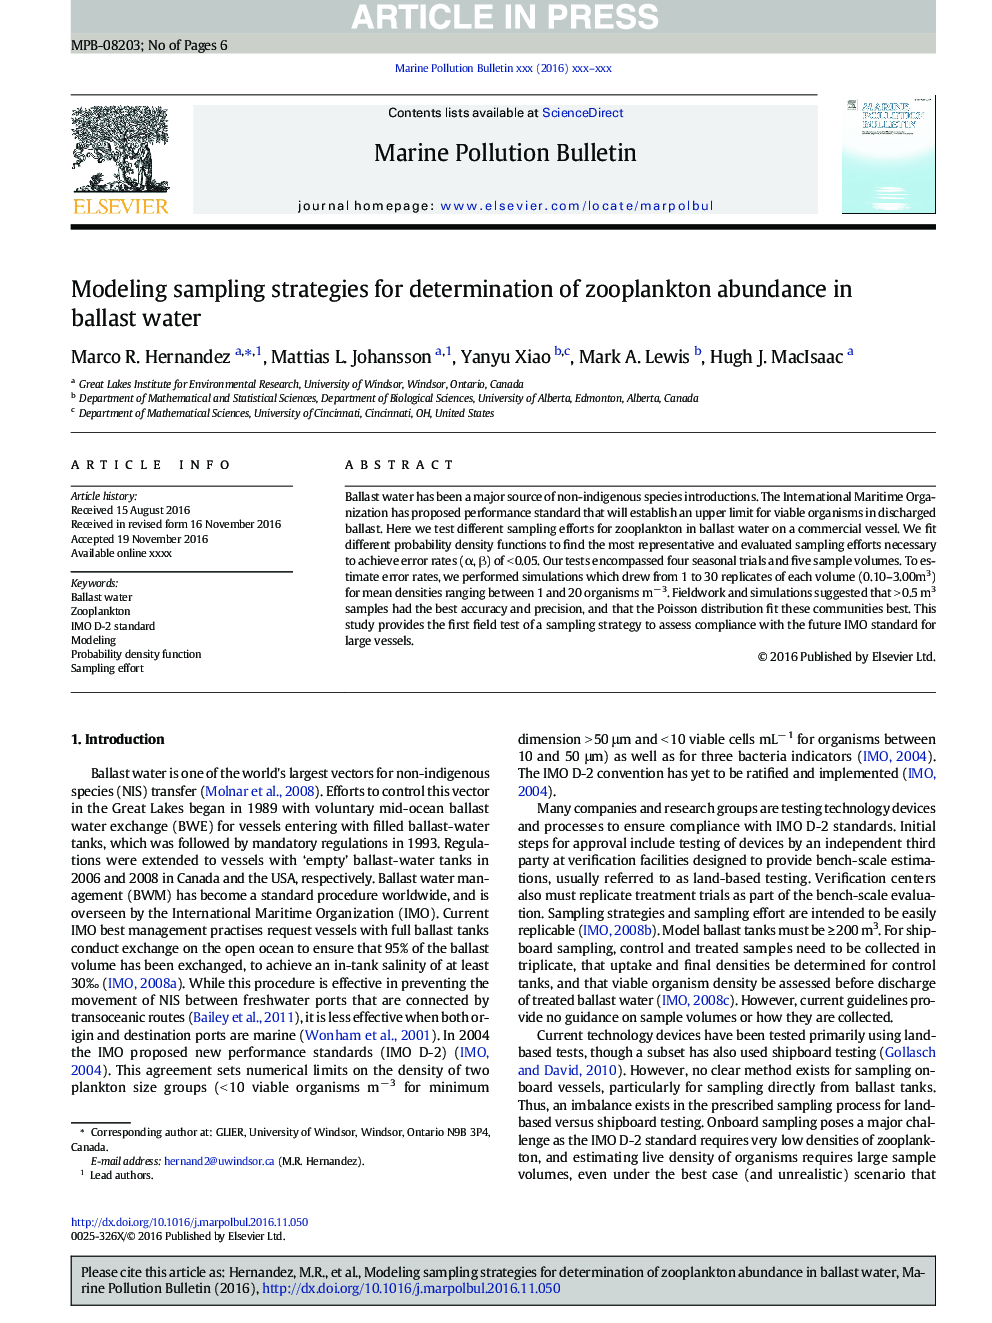 Modeling sampling strategies for determination of zooplankton abundance in ballast water